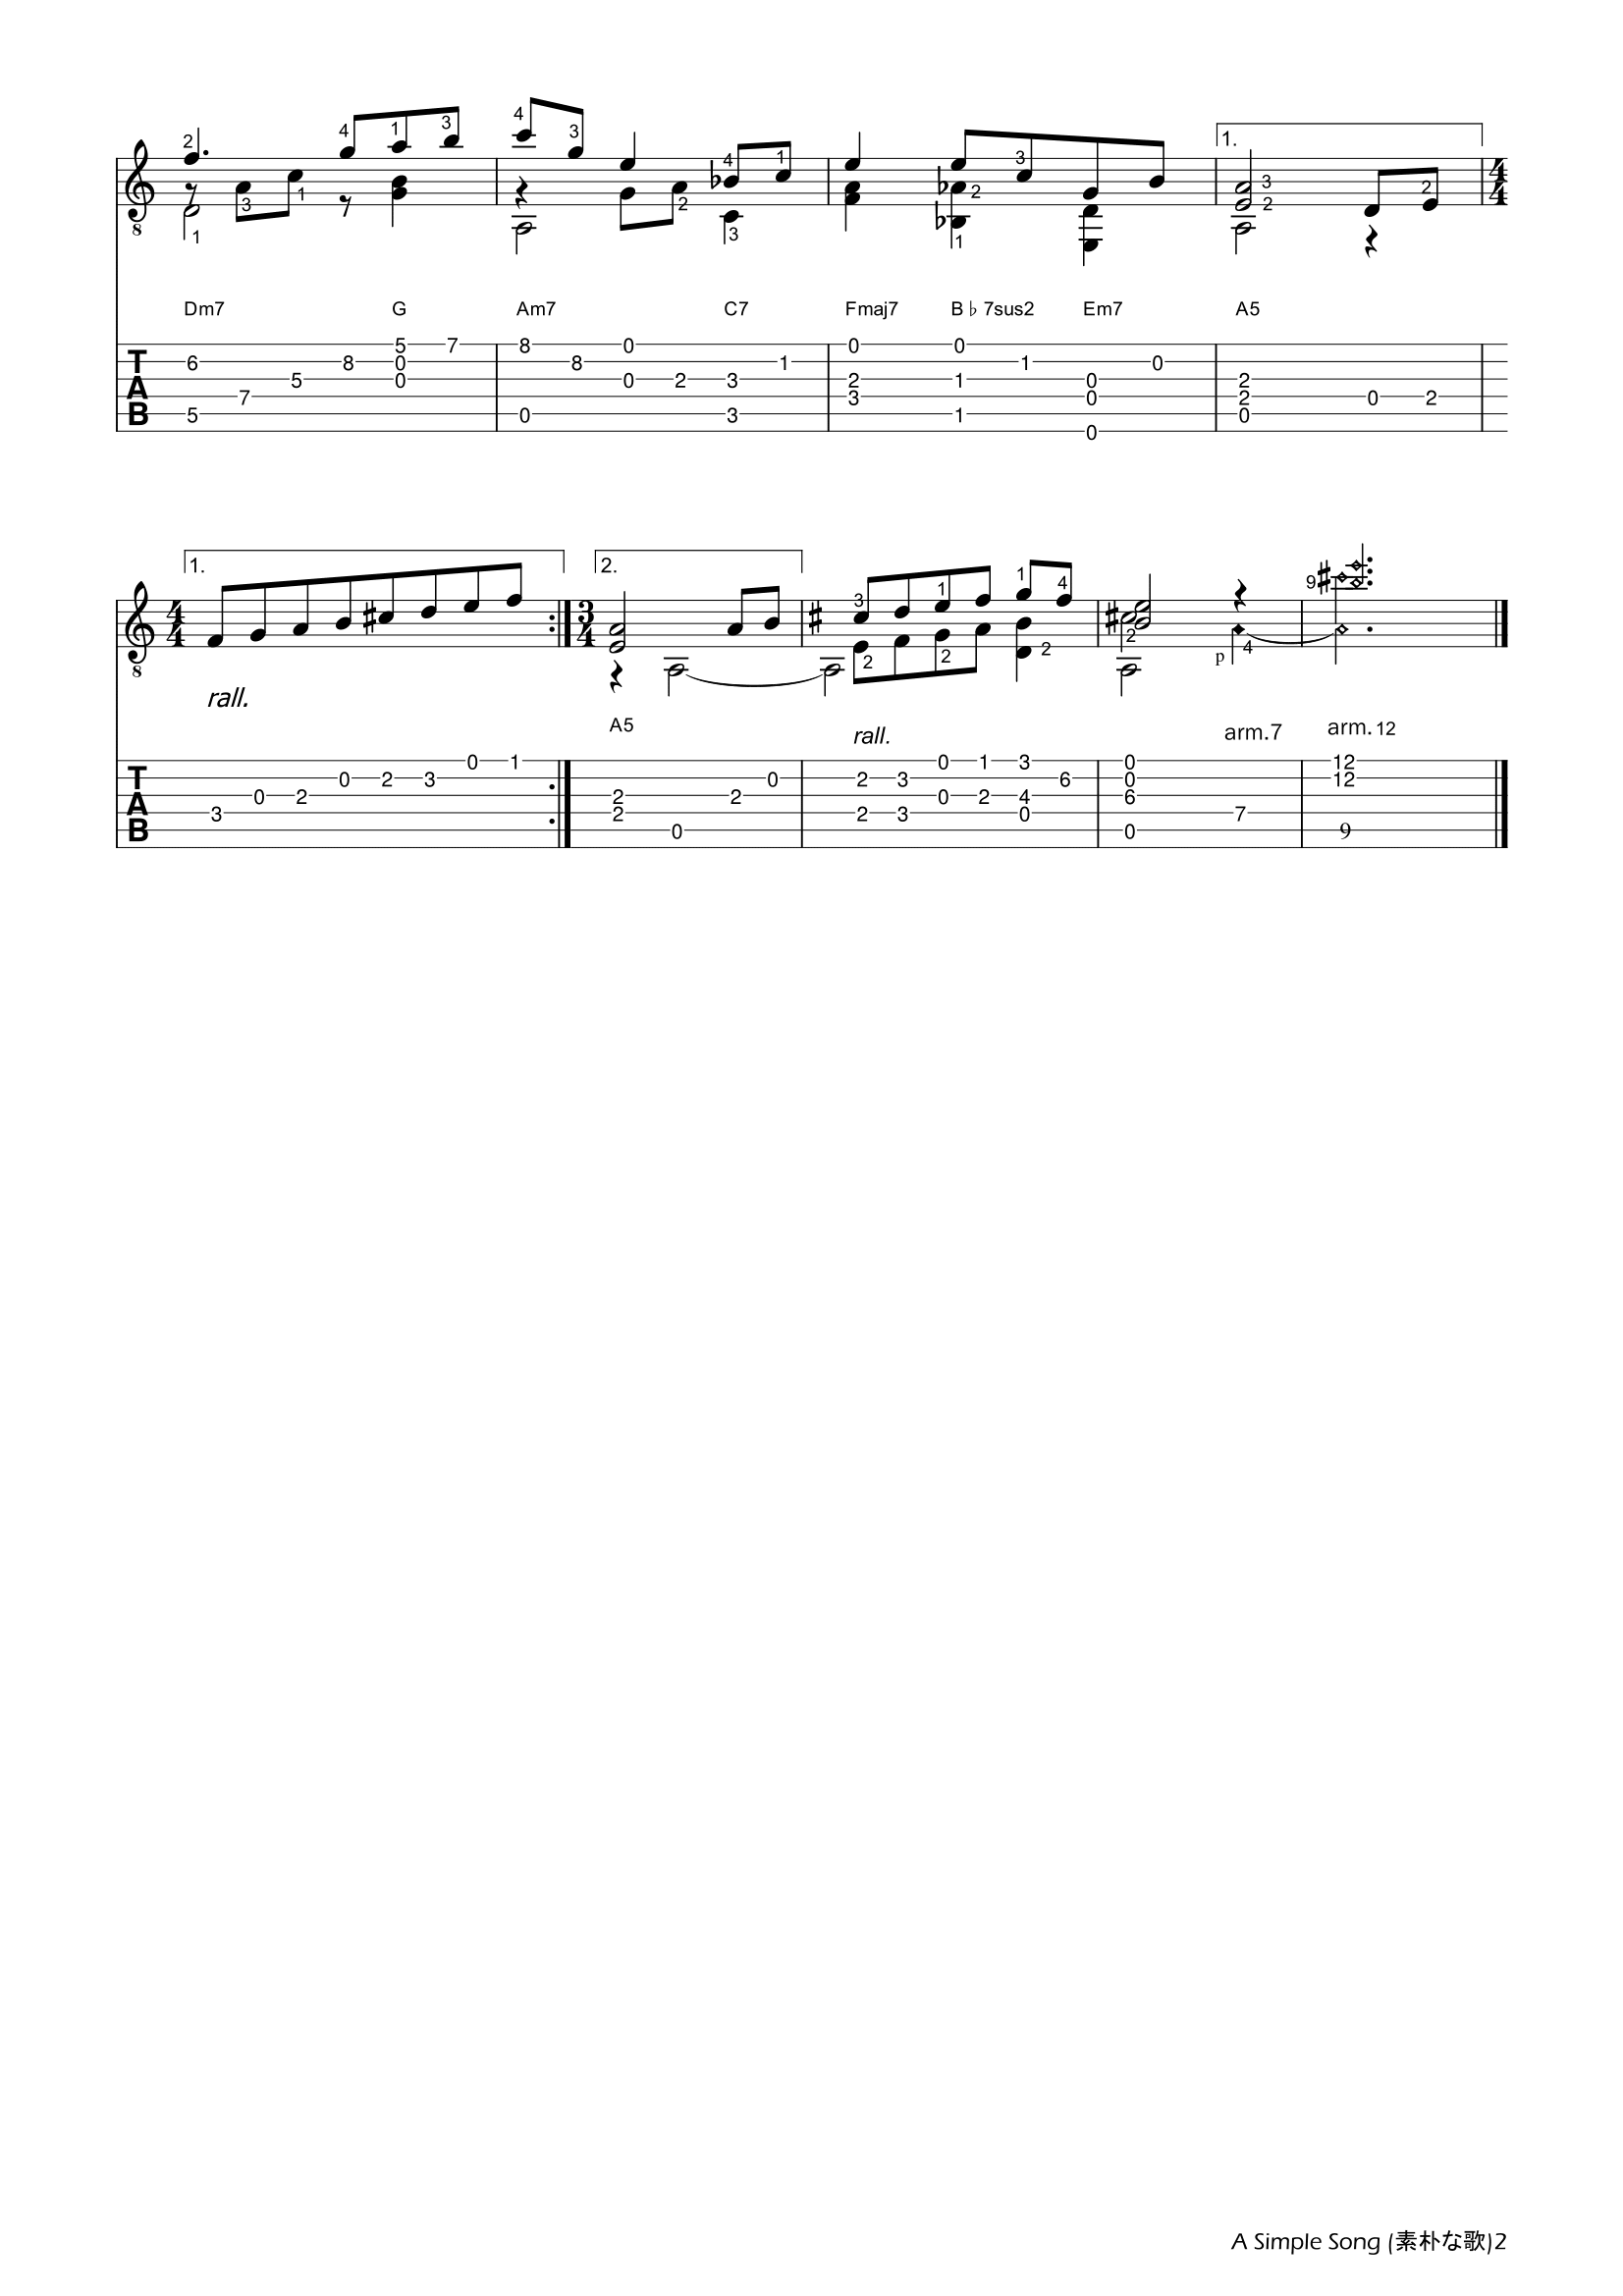 A Simple Song吉他谱(图片谱,指弹,独奏)_佐藤弘和(Hirokazu Sato)_A Simple Song-2.png